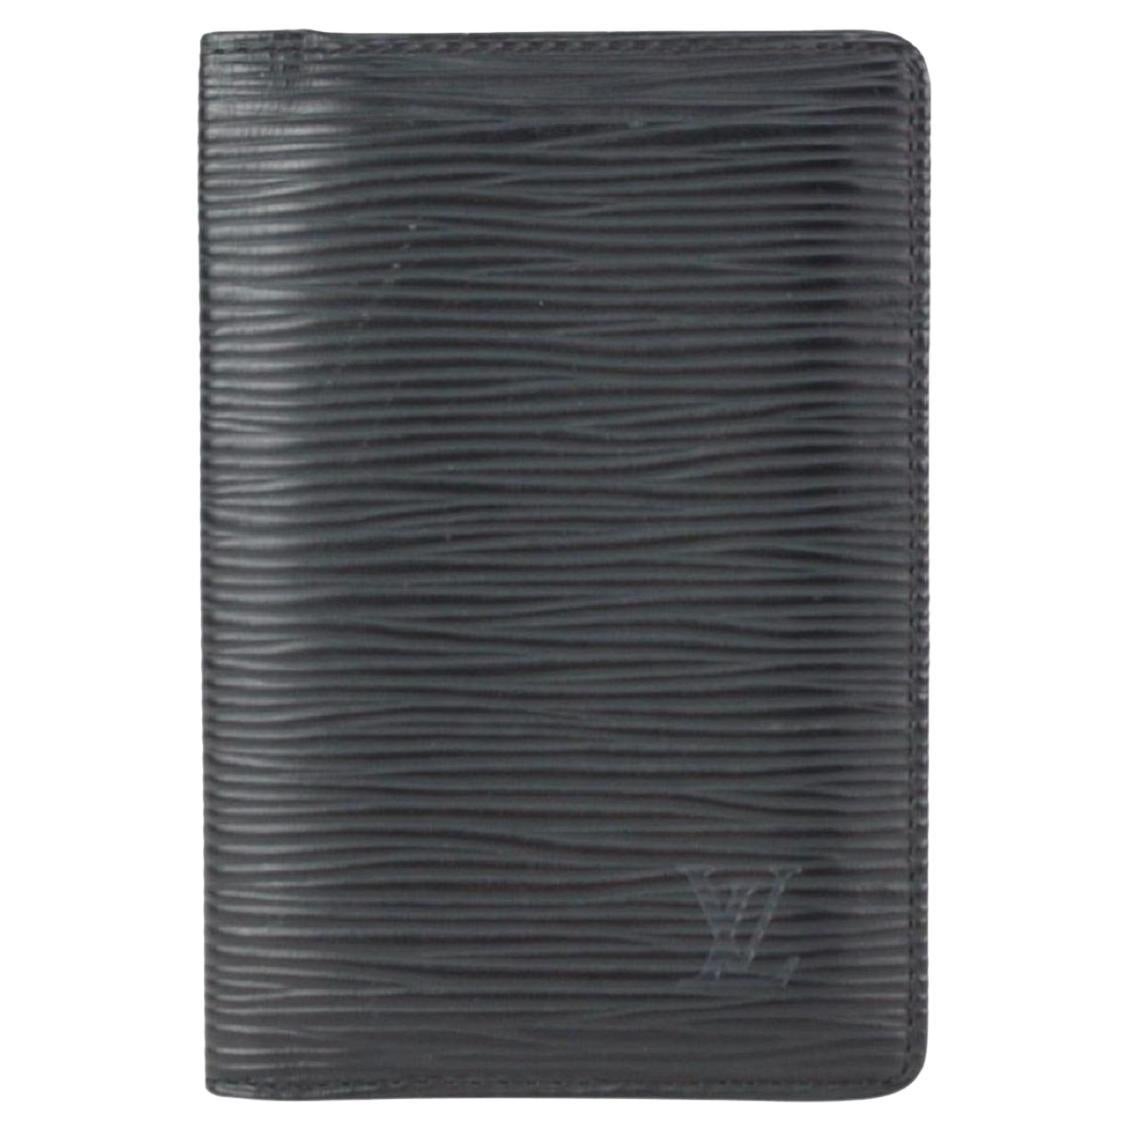 Louis Vuitton Black Epi Leather Noir Porte Cartes Card Holder Wallet 824lv51 For Sale